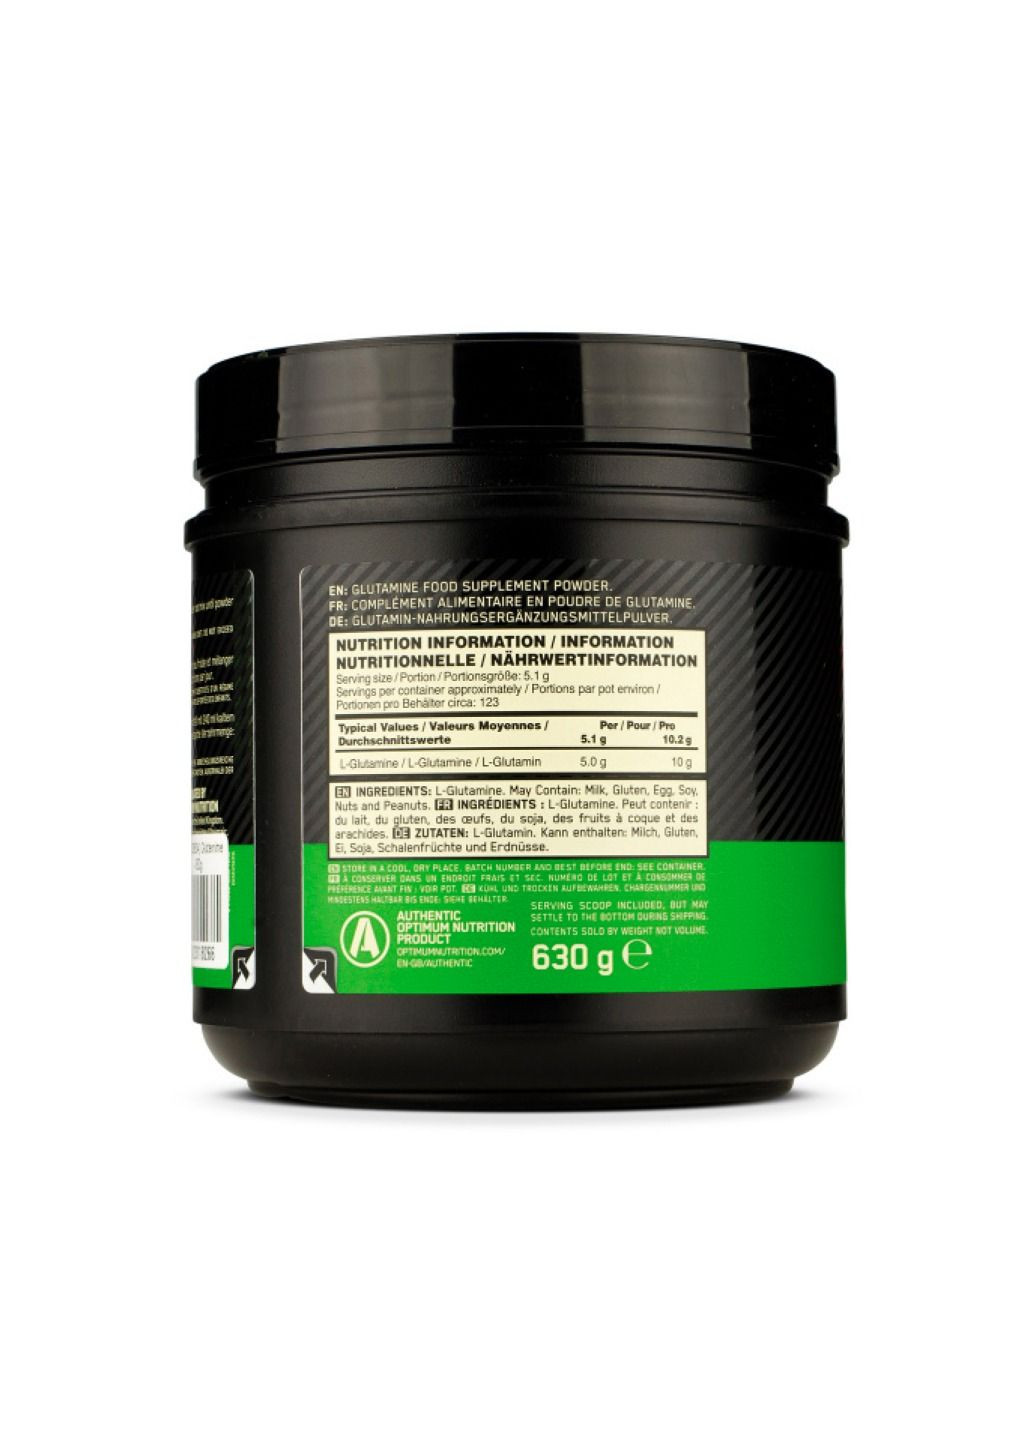 Комплекс амінокислот Glutamine Powder - 630g Optimum Nutrition (285787836)